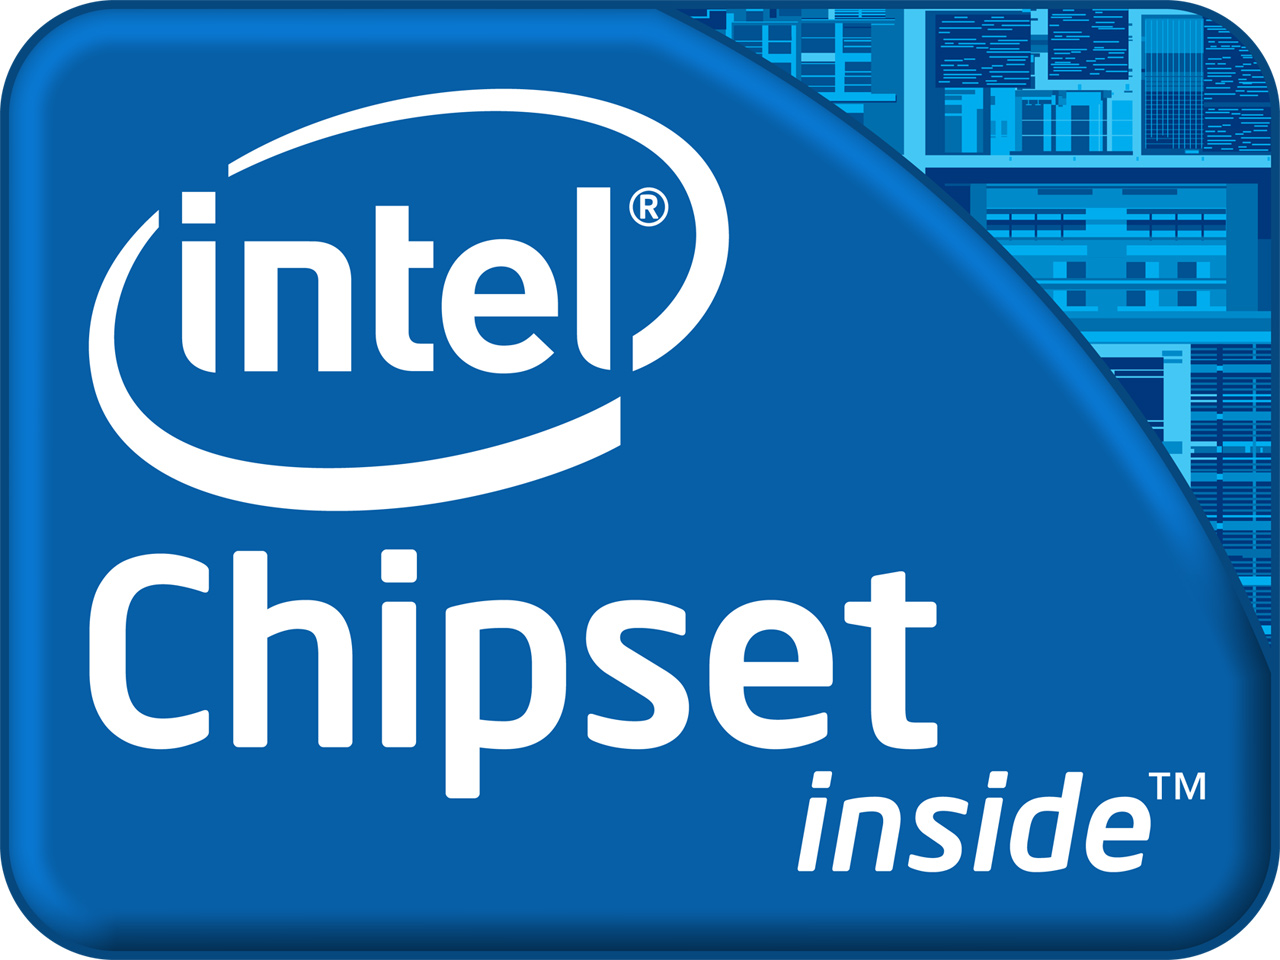 intel chipset logo